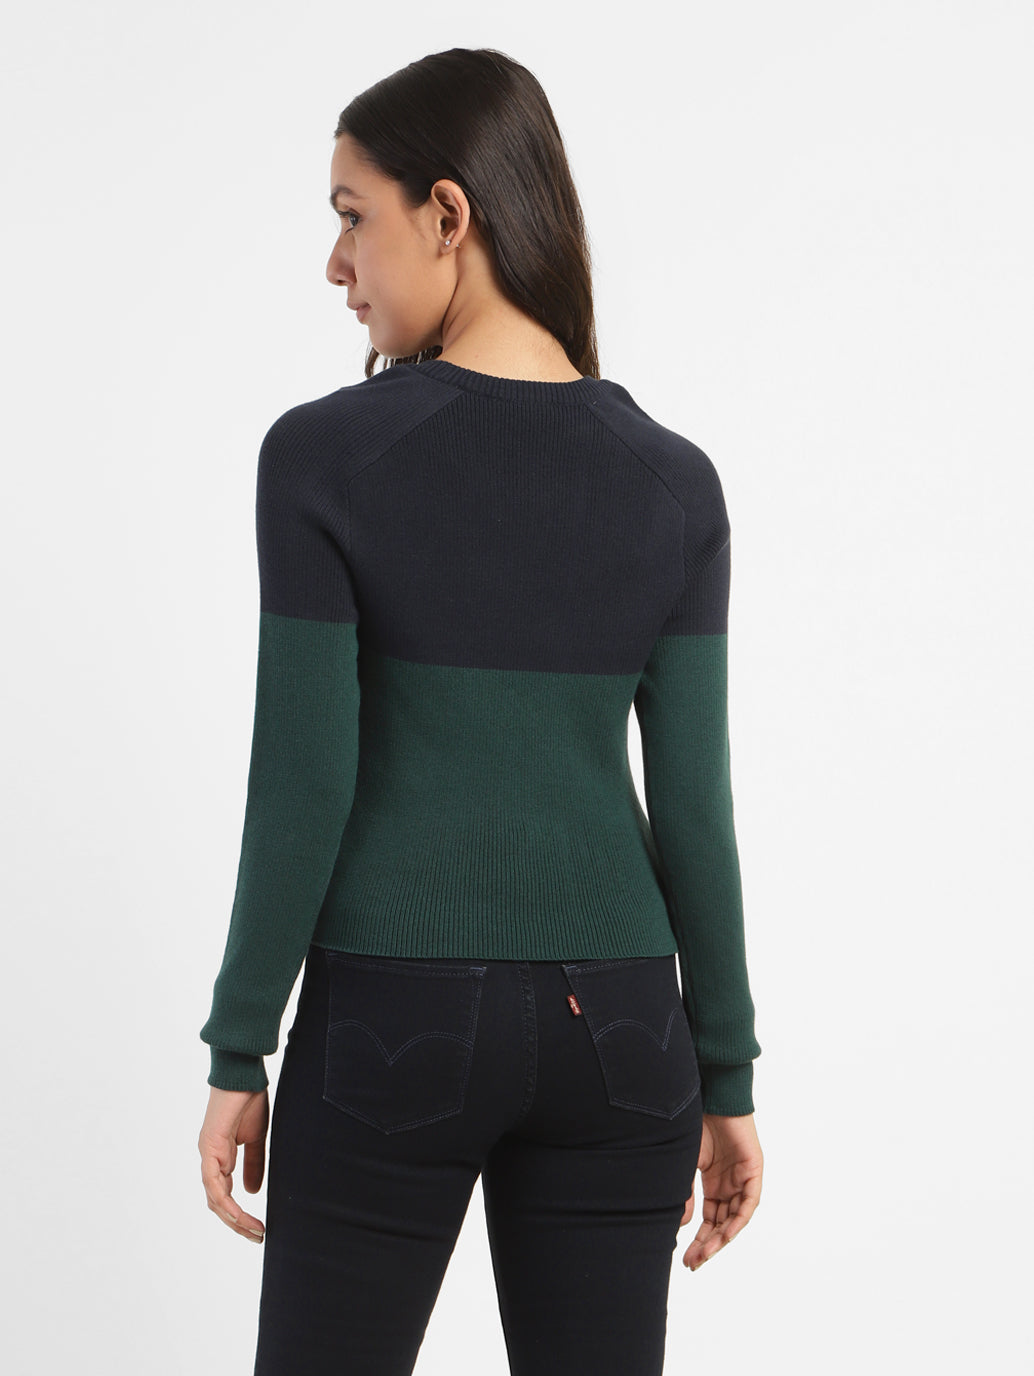 Women's Colorblock Crew Neck Sweater